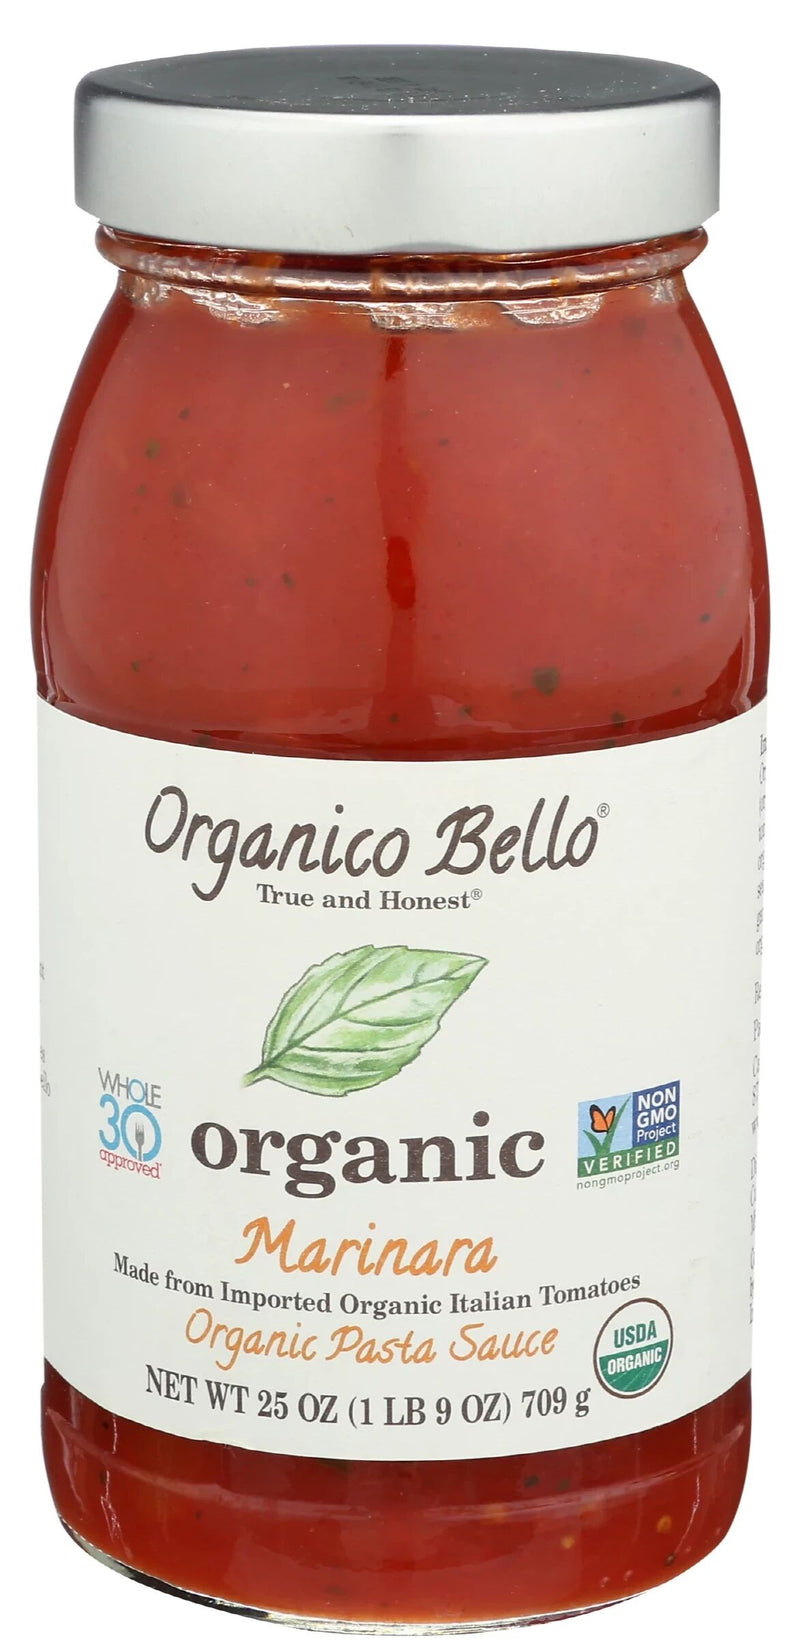 Organico Bello No Sugar Added Organic Pasta Sauce